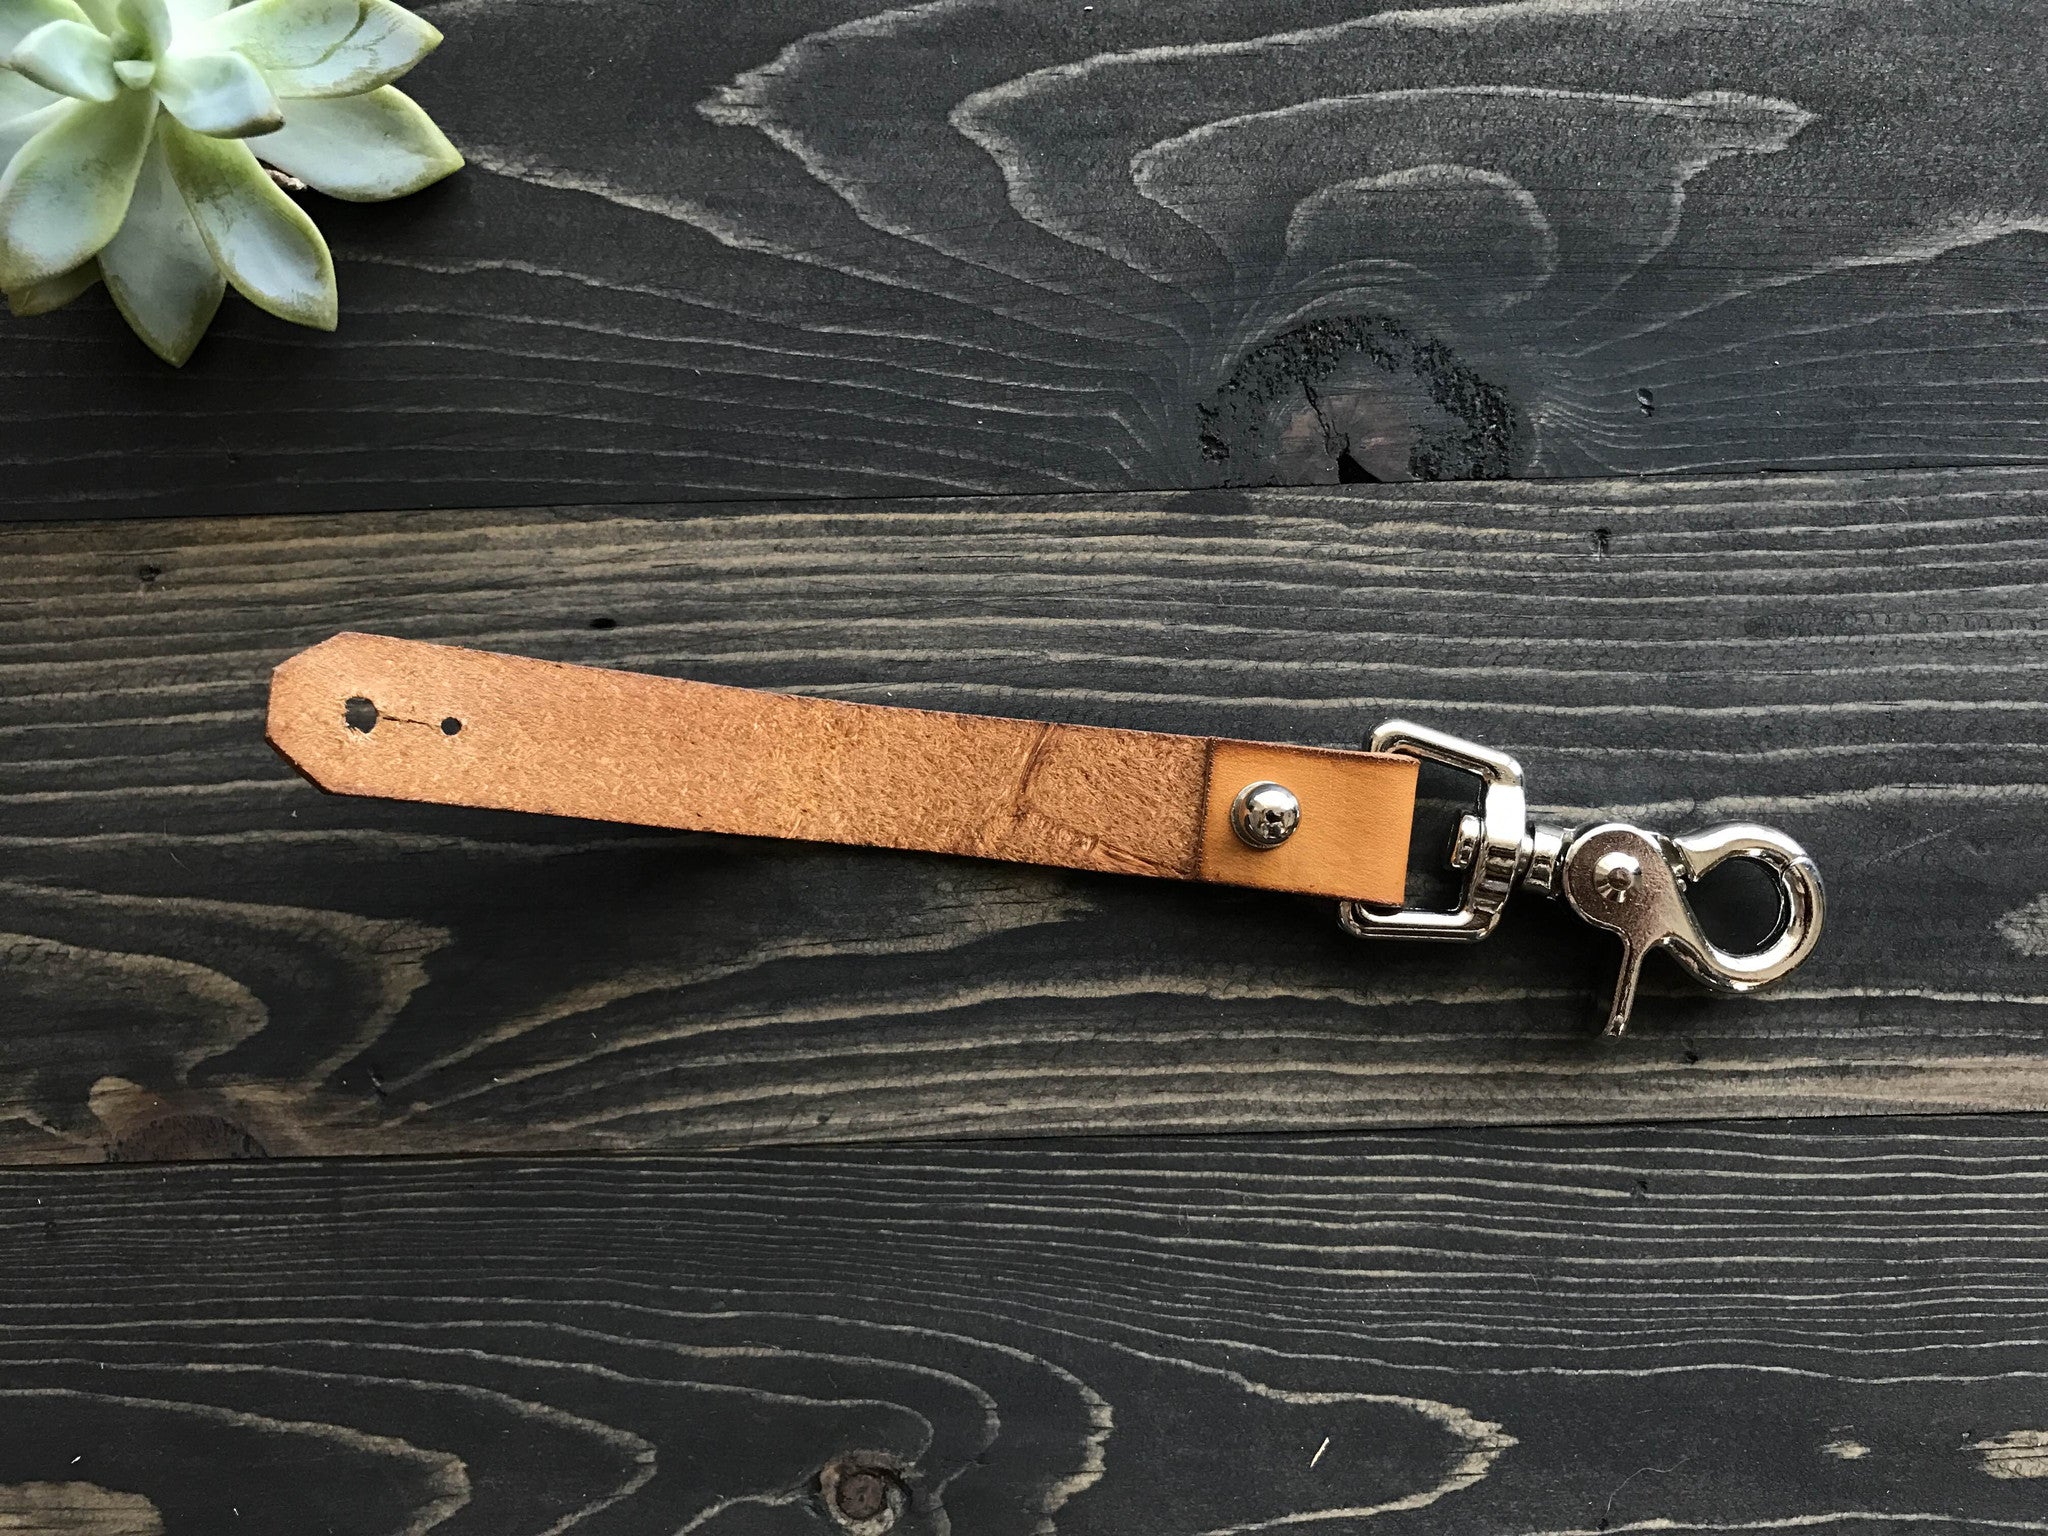 Leather Key Holder Orangizer - RECNEPS DESIGN